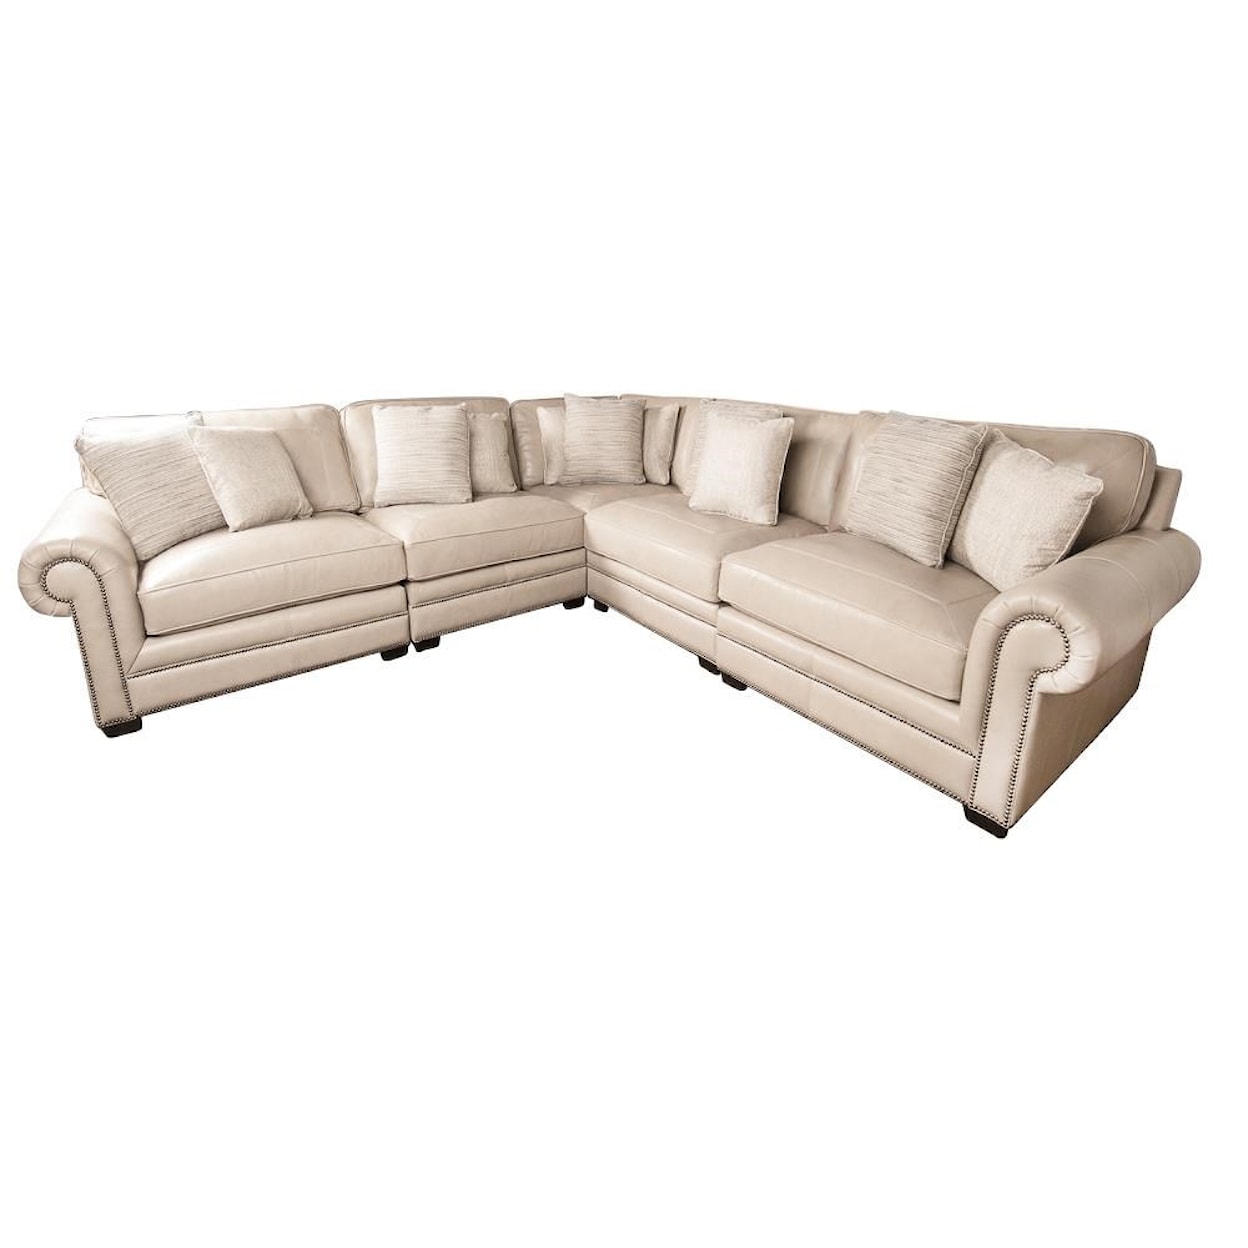 Bernhardt Grandview Grandview 100% Leather Sectional Sofa